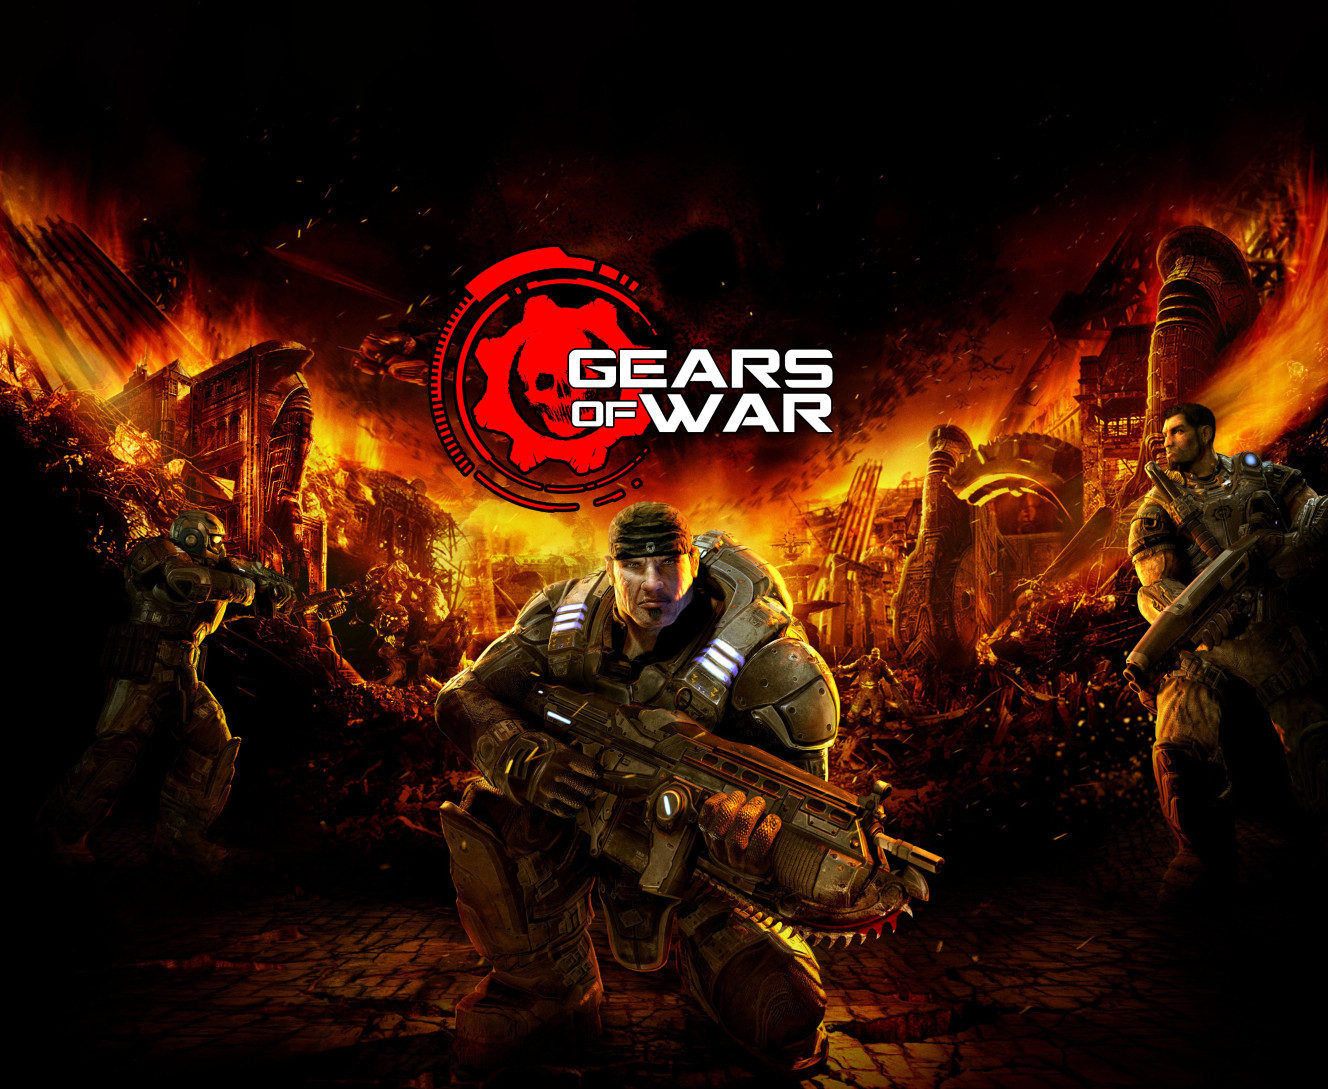 Gears of War 13